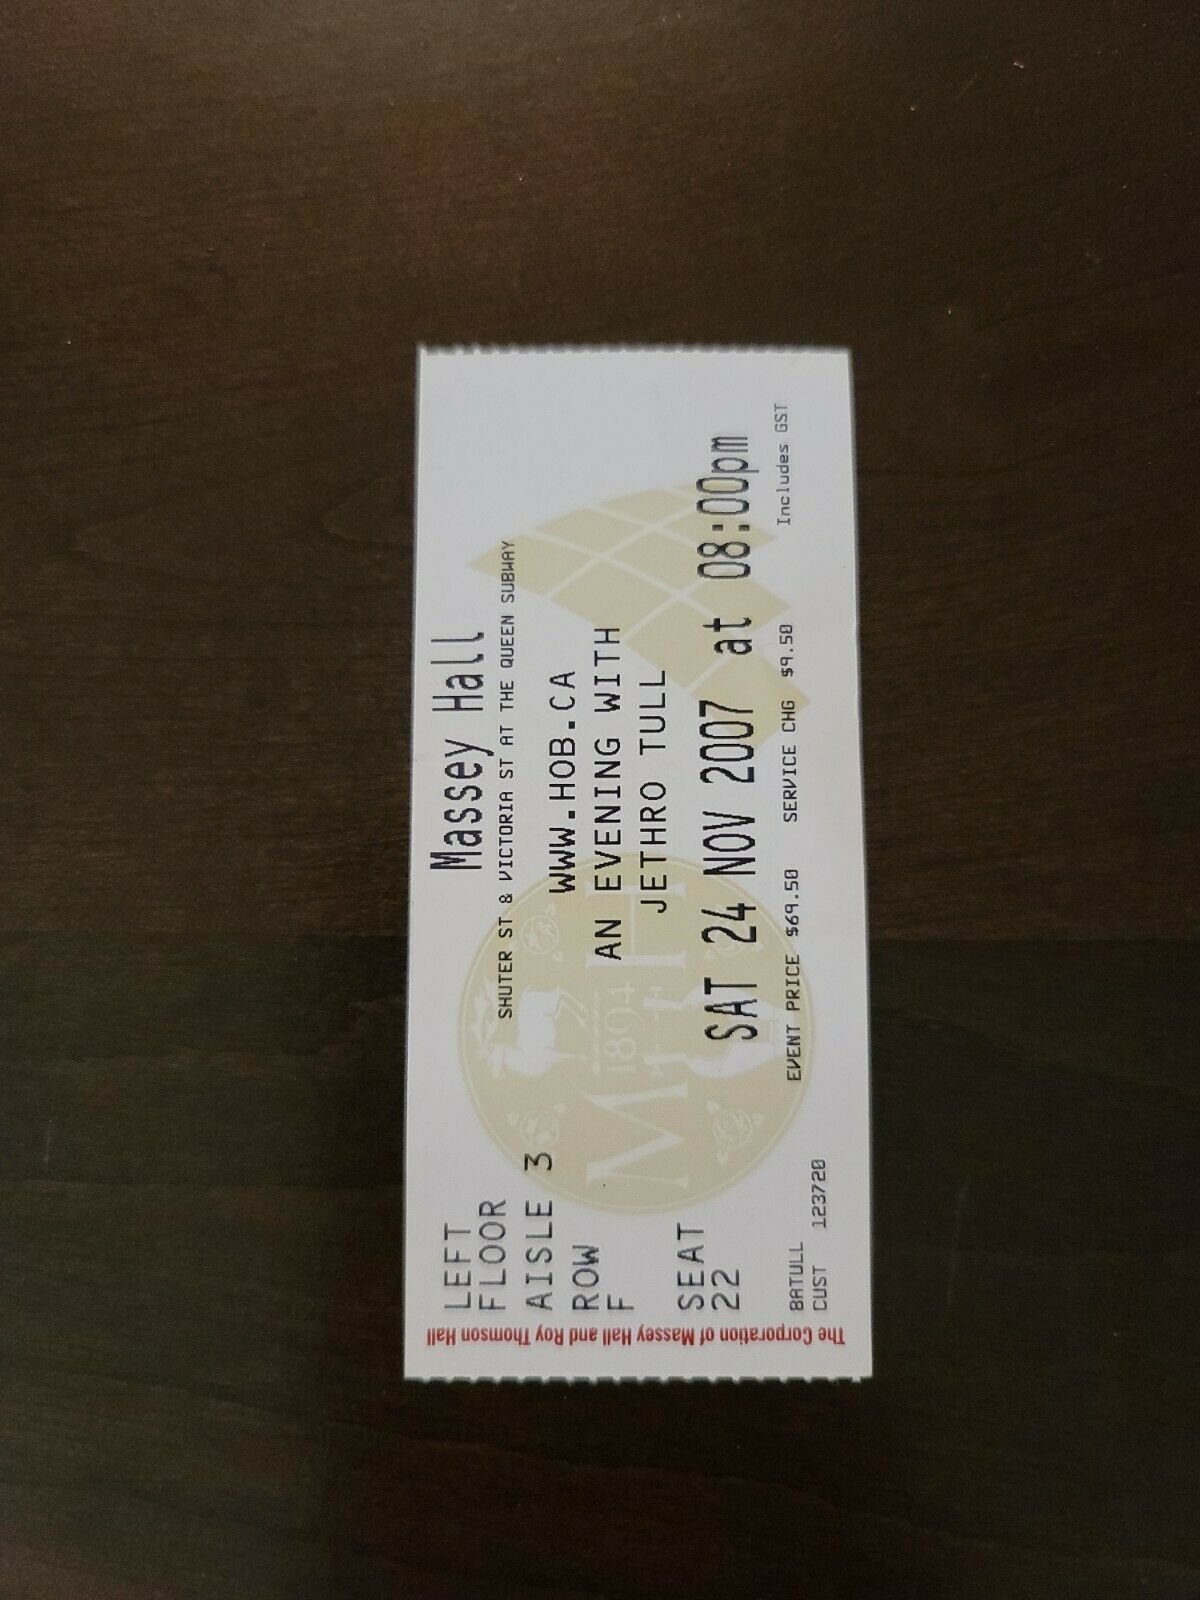 Jethro Tull 2007, Toronto Massey Hall Original Concert Ticket Stub